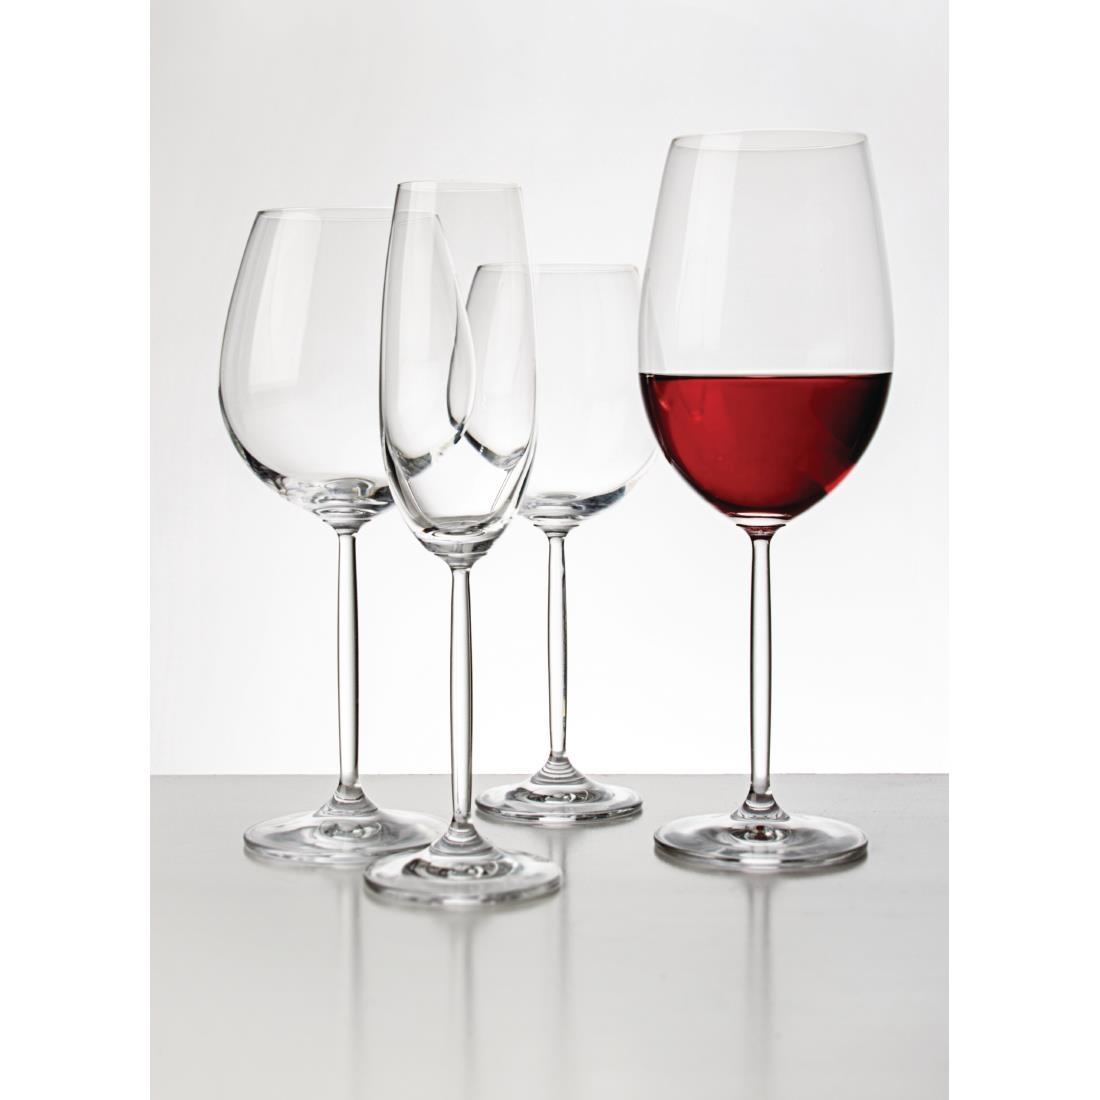 Olympia Modale Crystal Wine Glasses 520ml (Pack of 6) - GF725  - 2